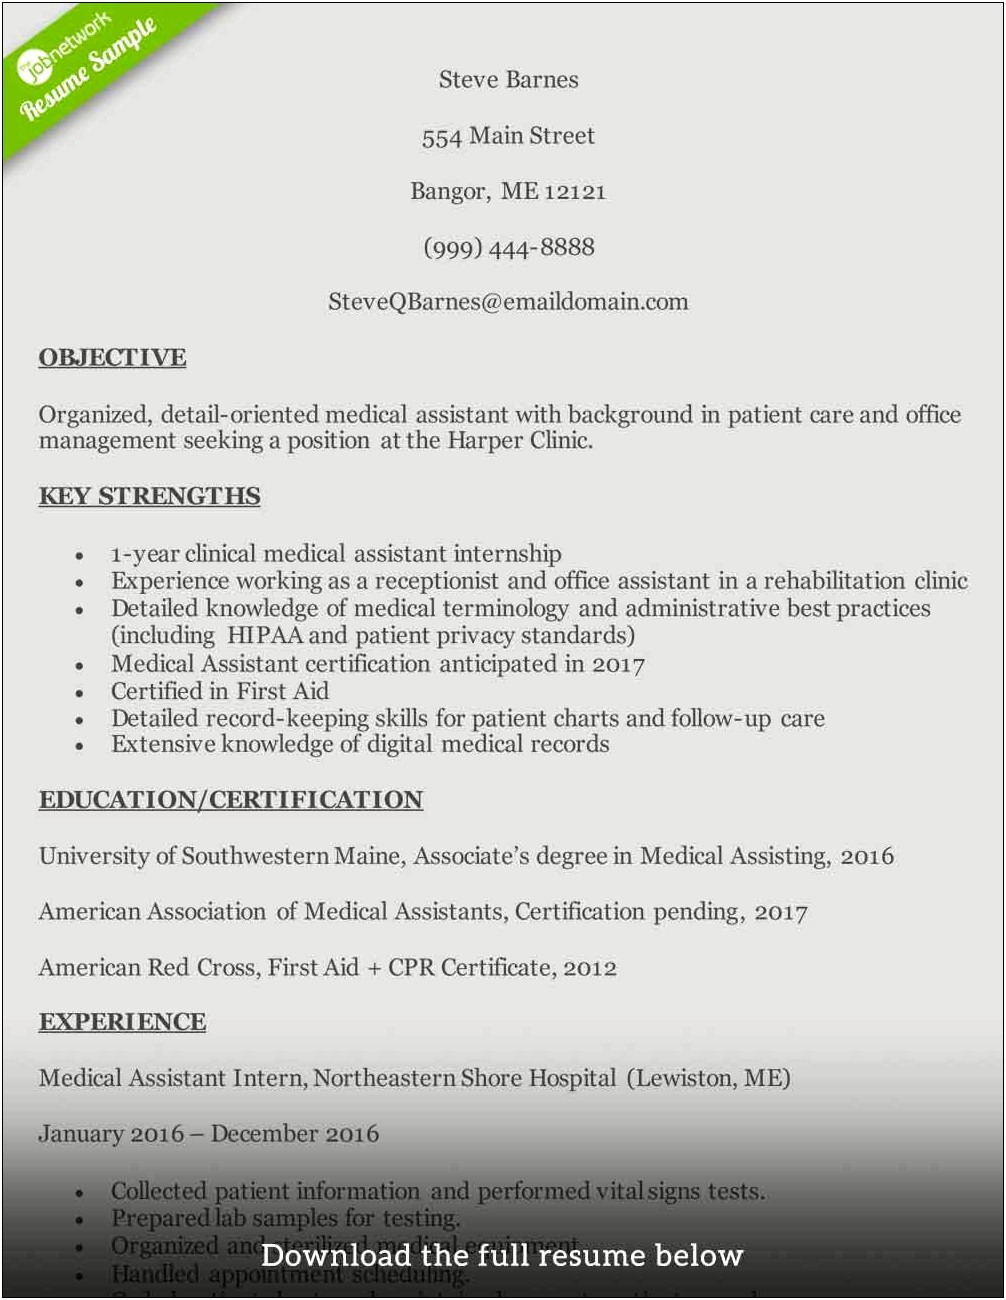 Description Of A Medical Assistant For Resume